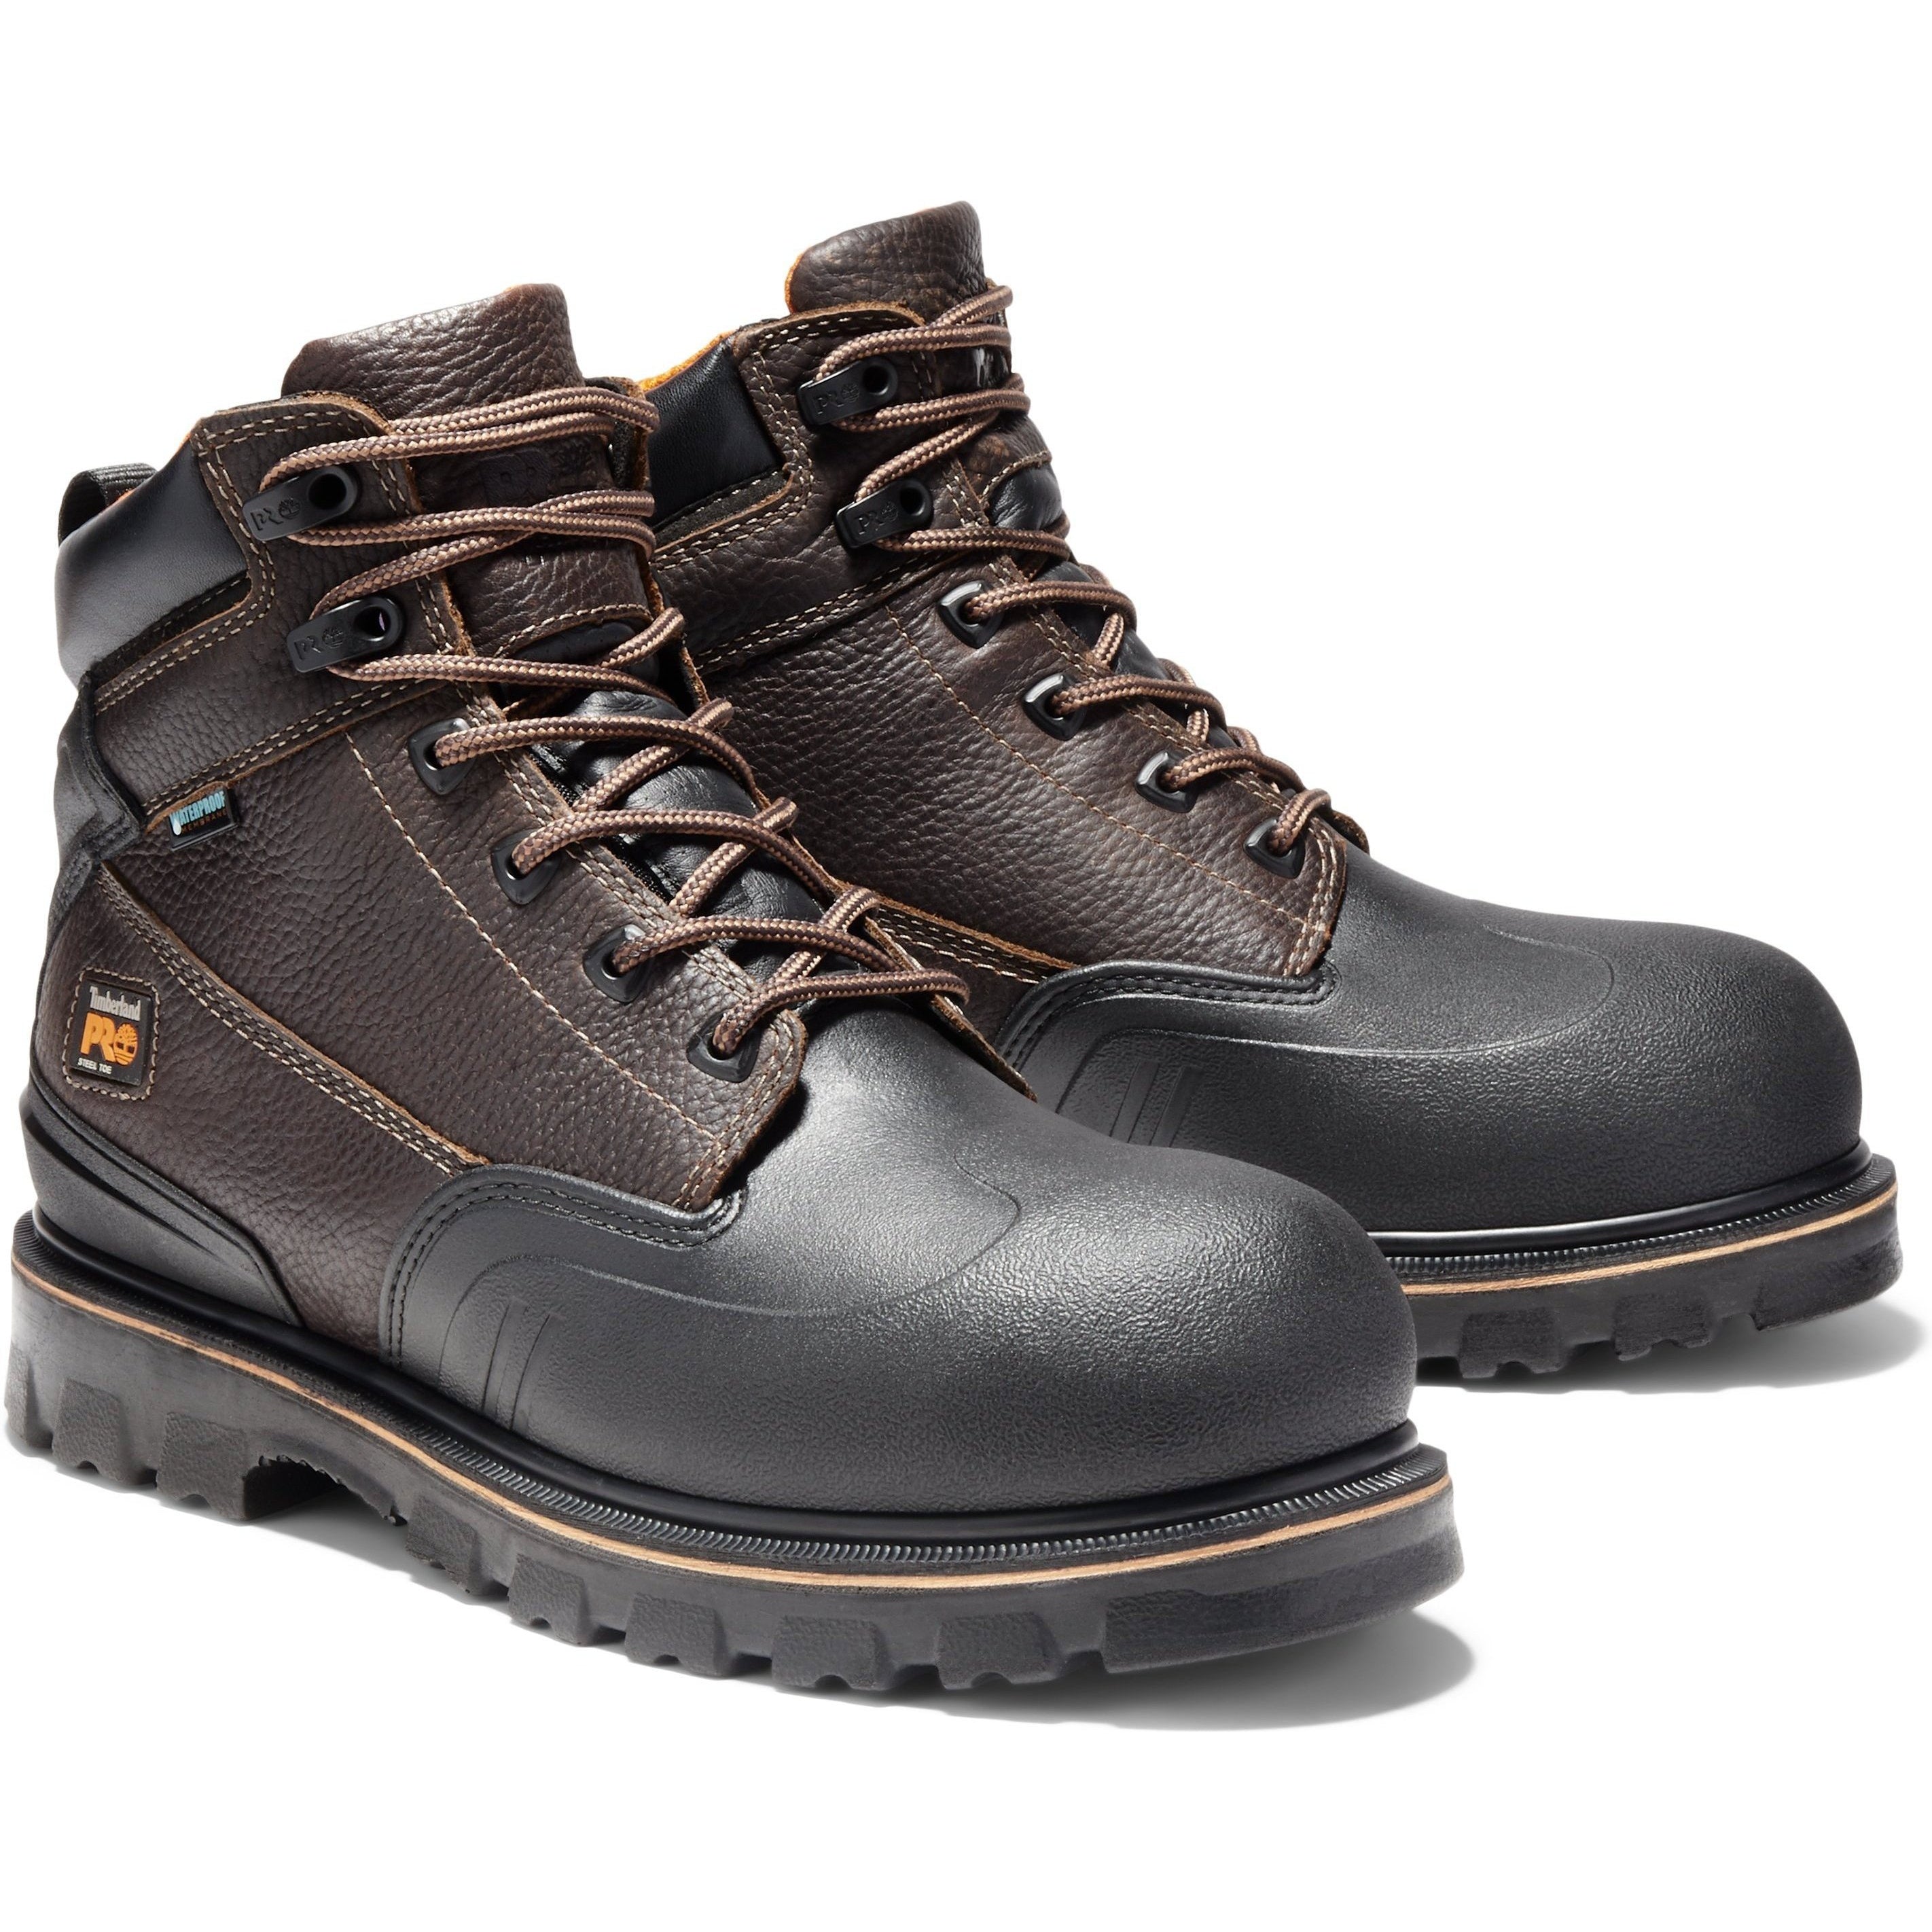 Timberland PRO Men's Rigmaster XT Steel Toe WP Work Boot - TB0A11RO214 7 / Medium / Brown - Overlook Boots